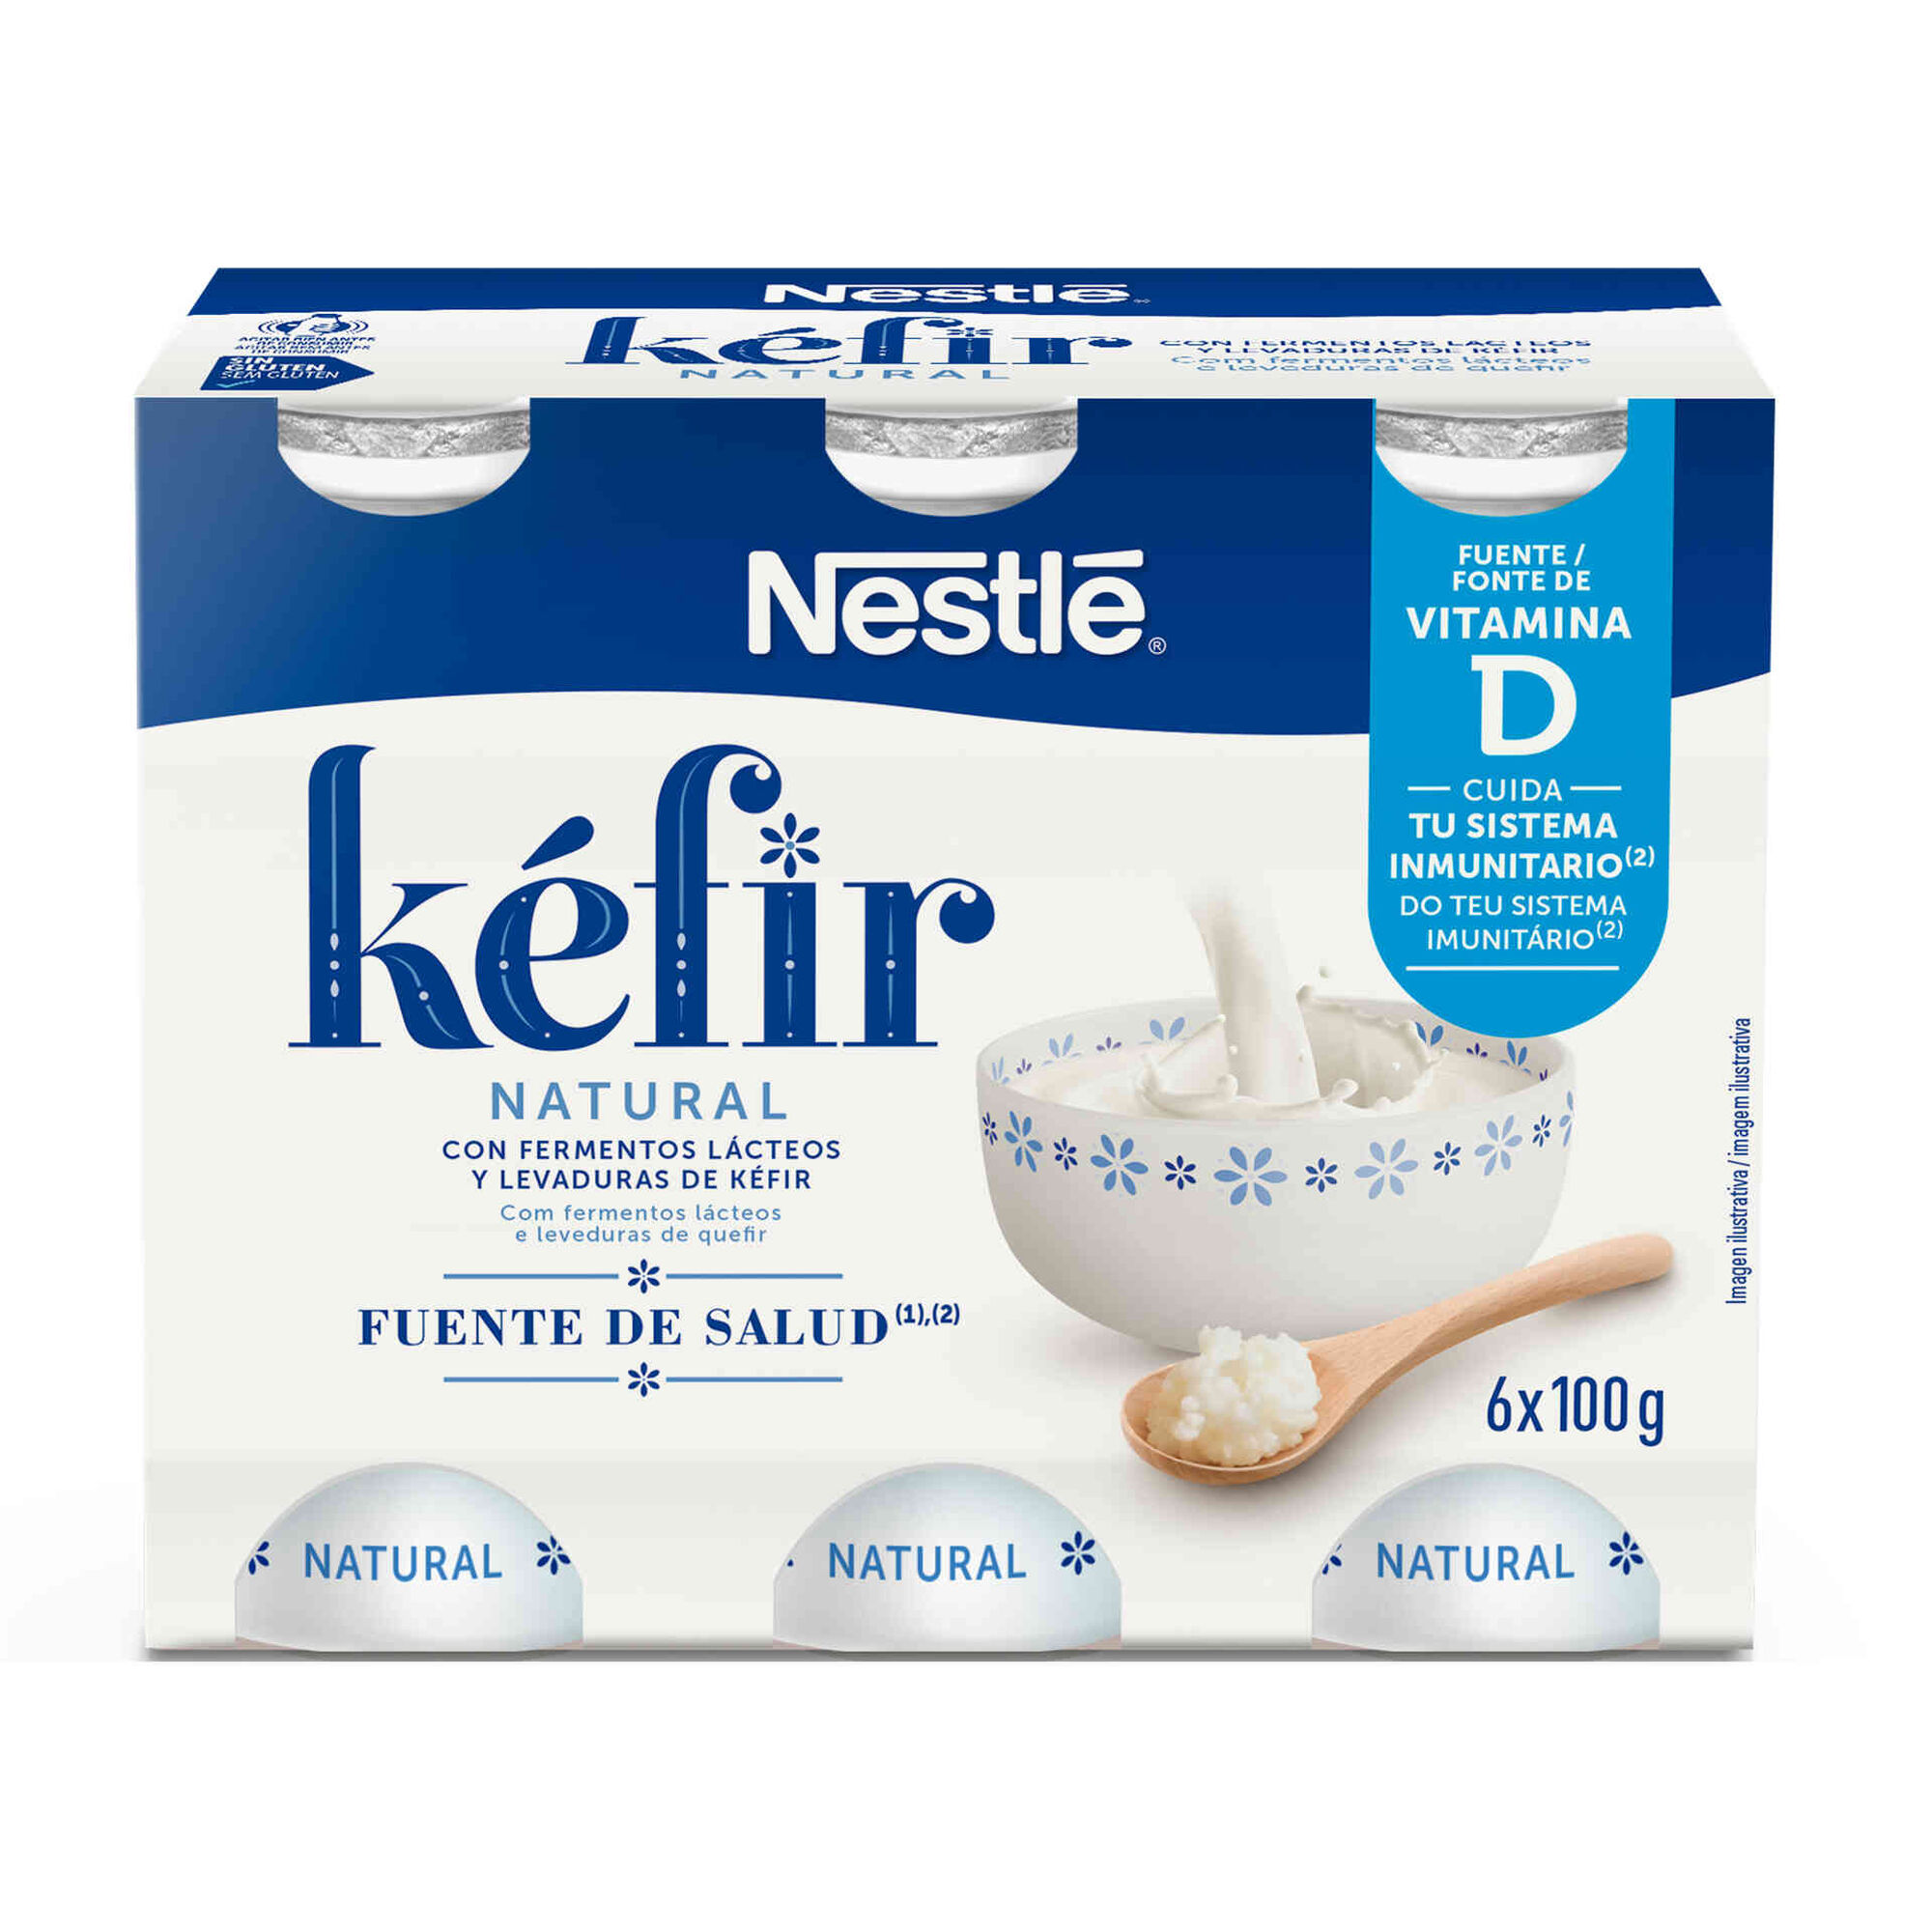 Iogurte Kefir Natural